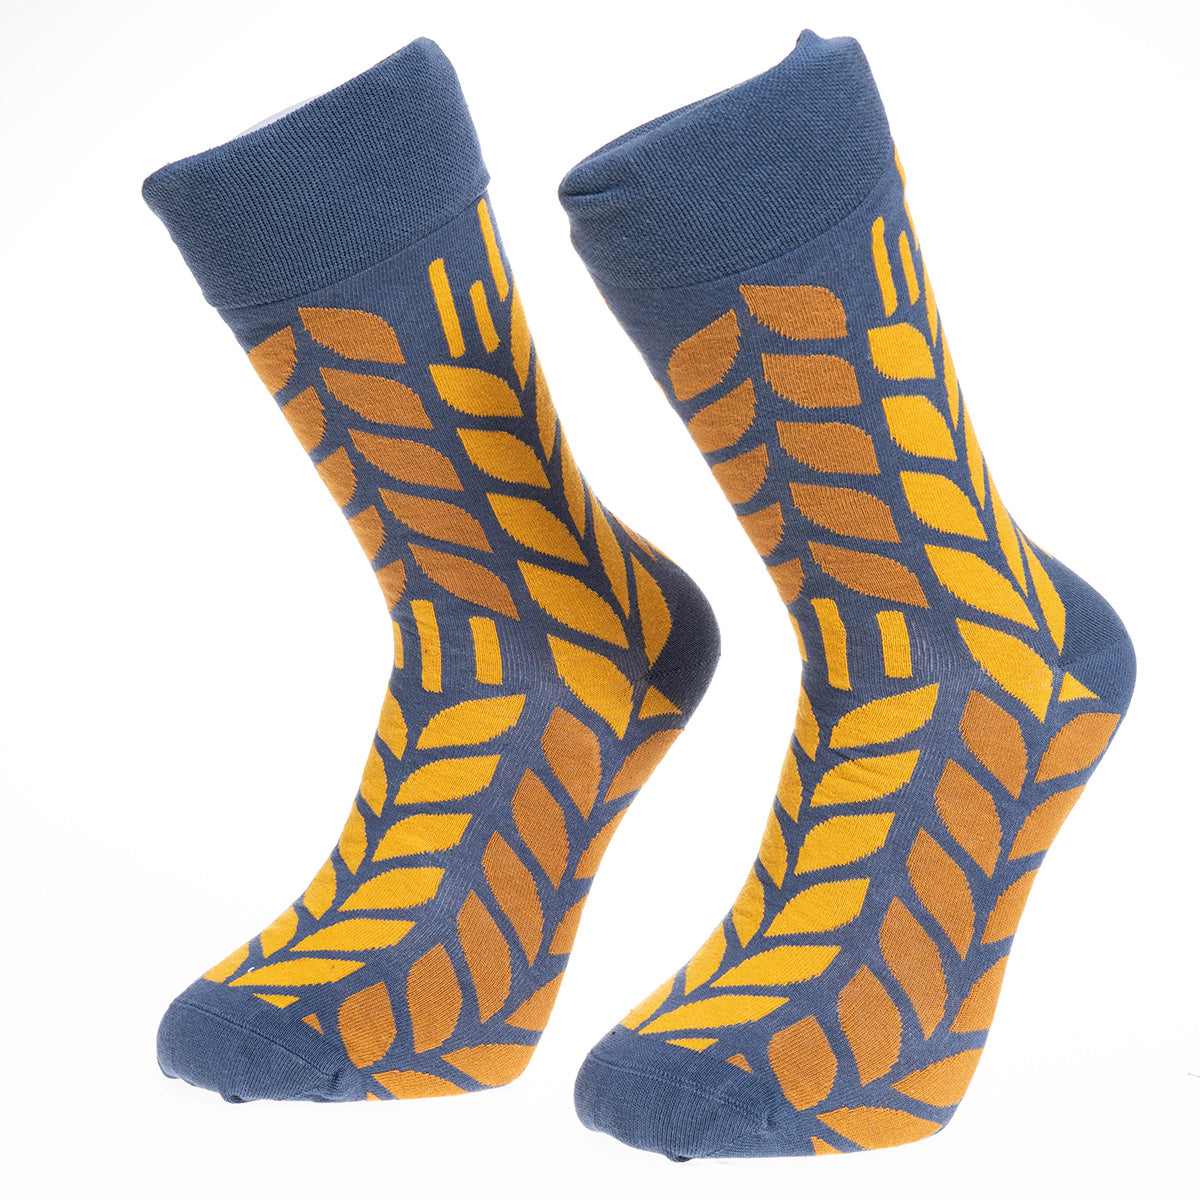 Yellow Leafs Printed-European Made - Egyptian Cotton Socks - Premium Cotton Fun socks with Soft Elastic